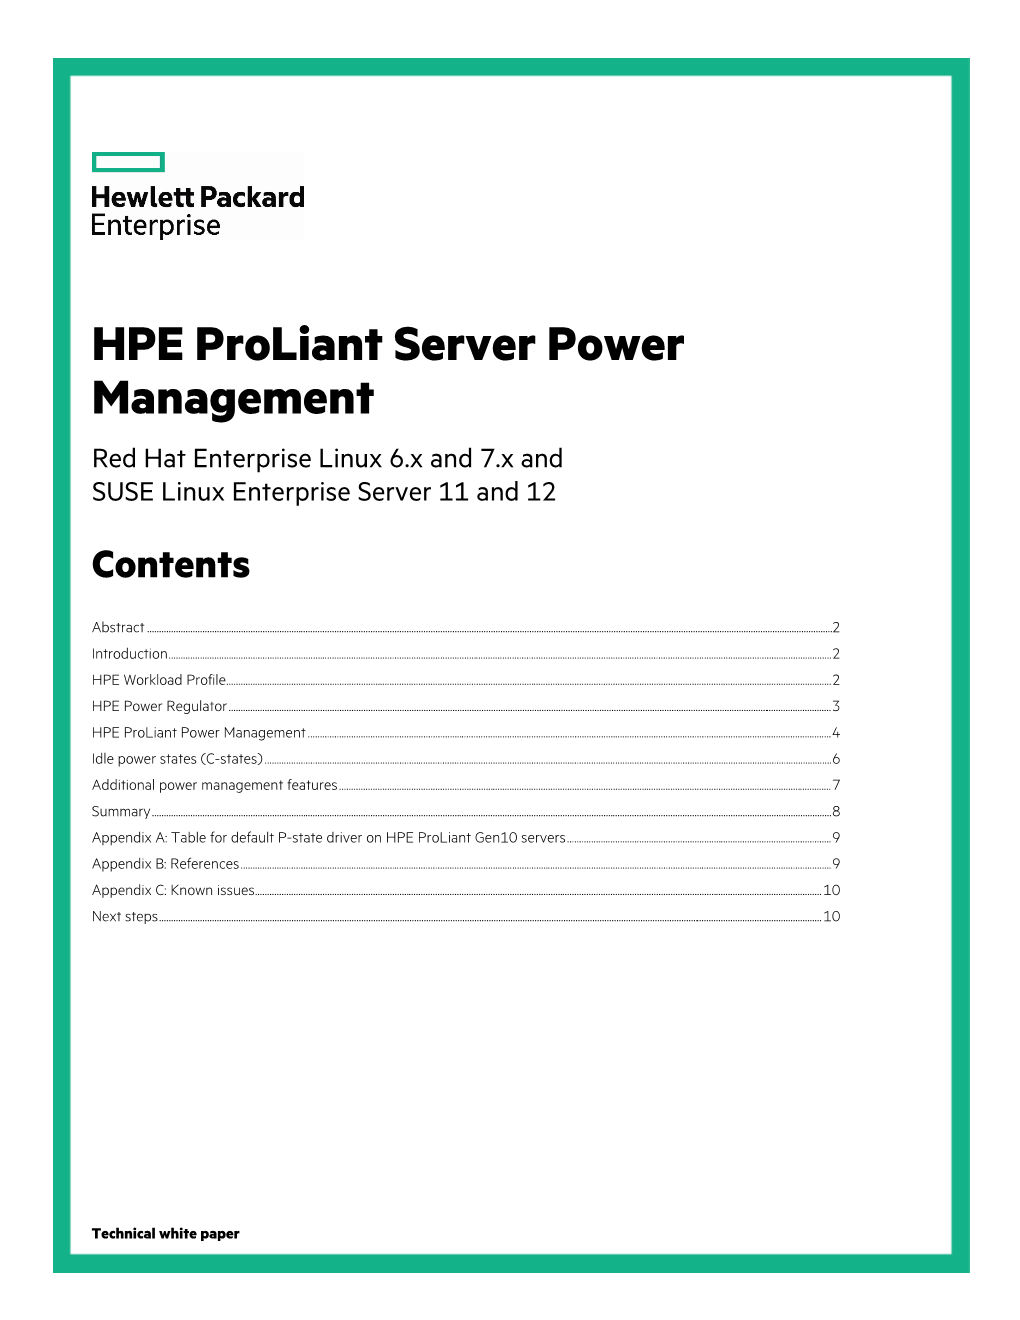 Gen10 HPE Proliant Server Power Management Technical White Paper